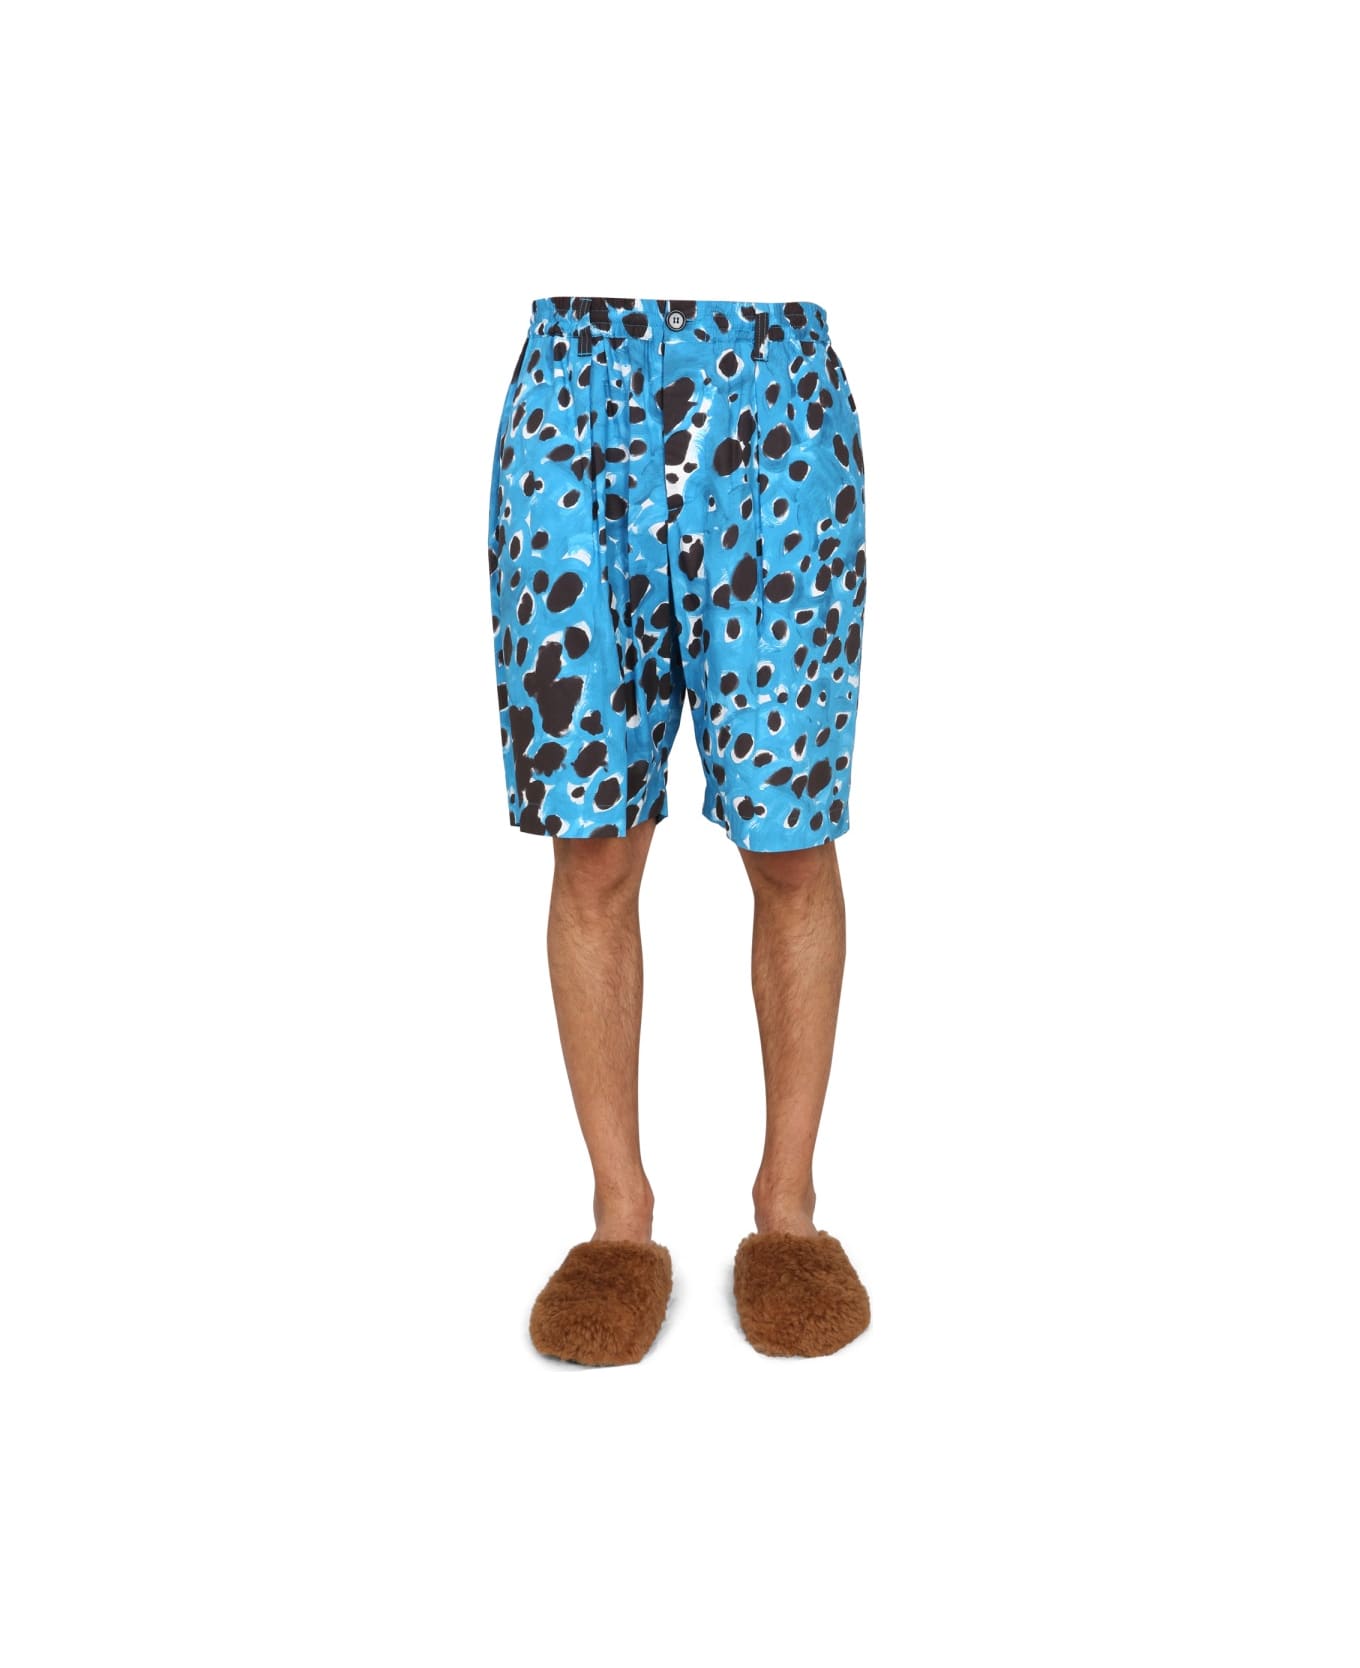 Marni Bermuda Shorts With Pop Dots Print - BABY BLUE